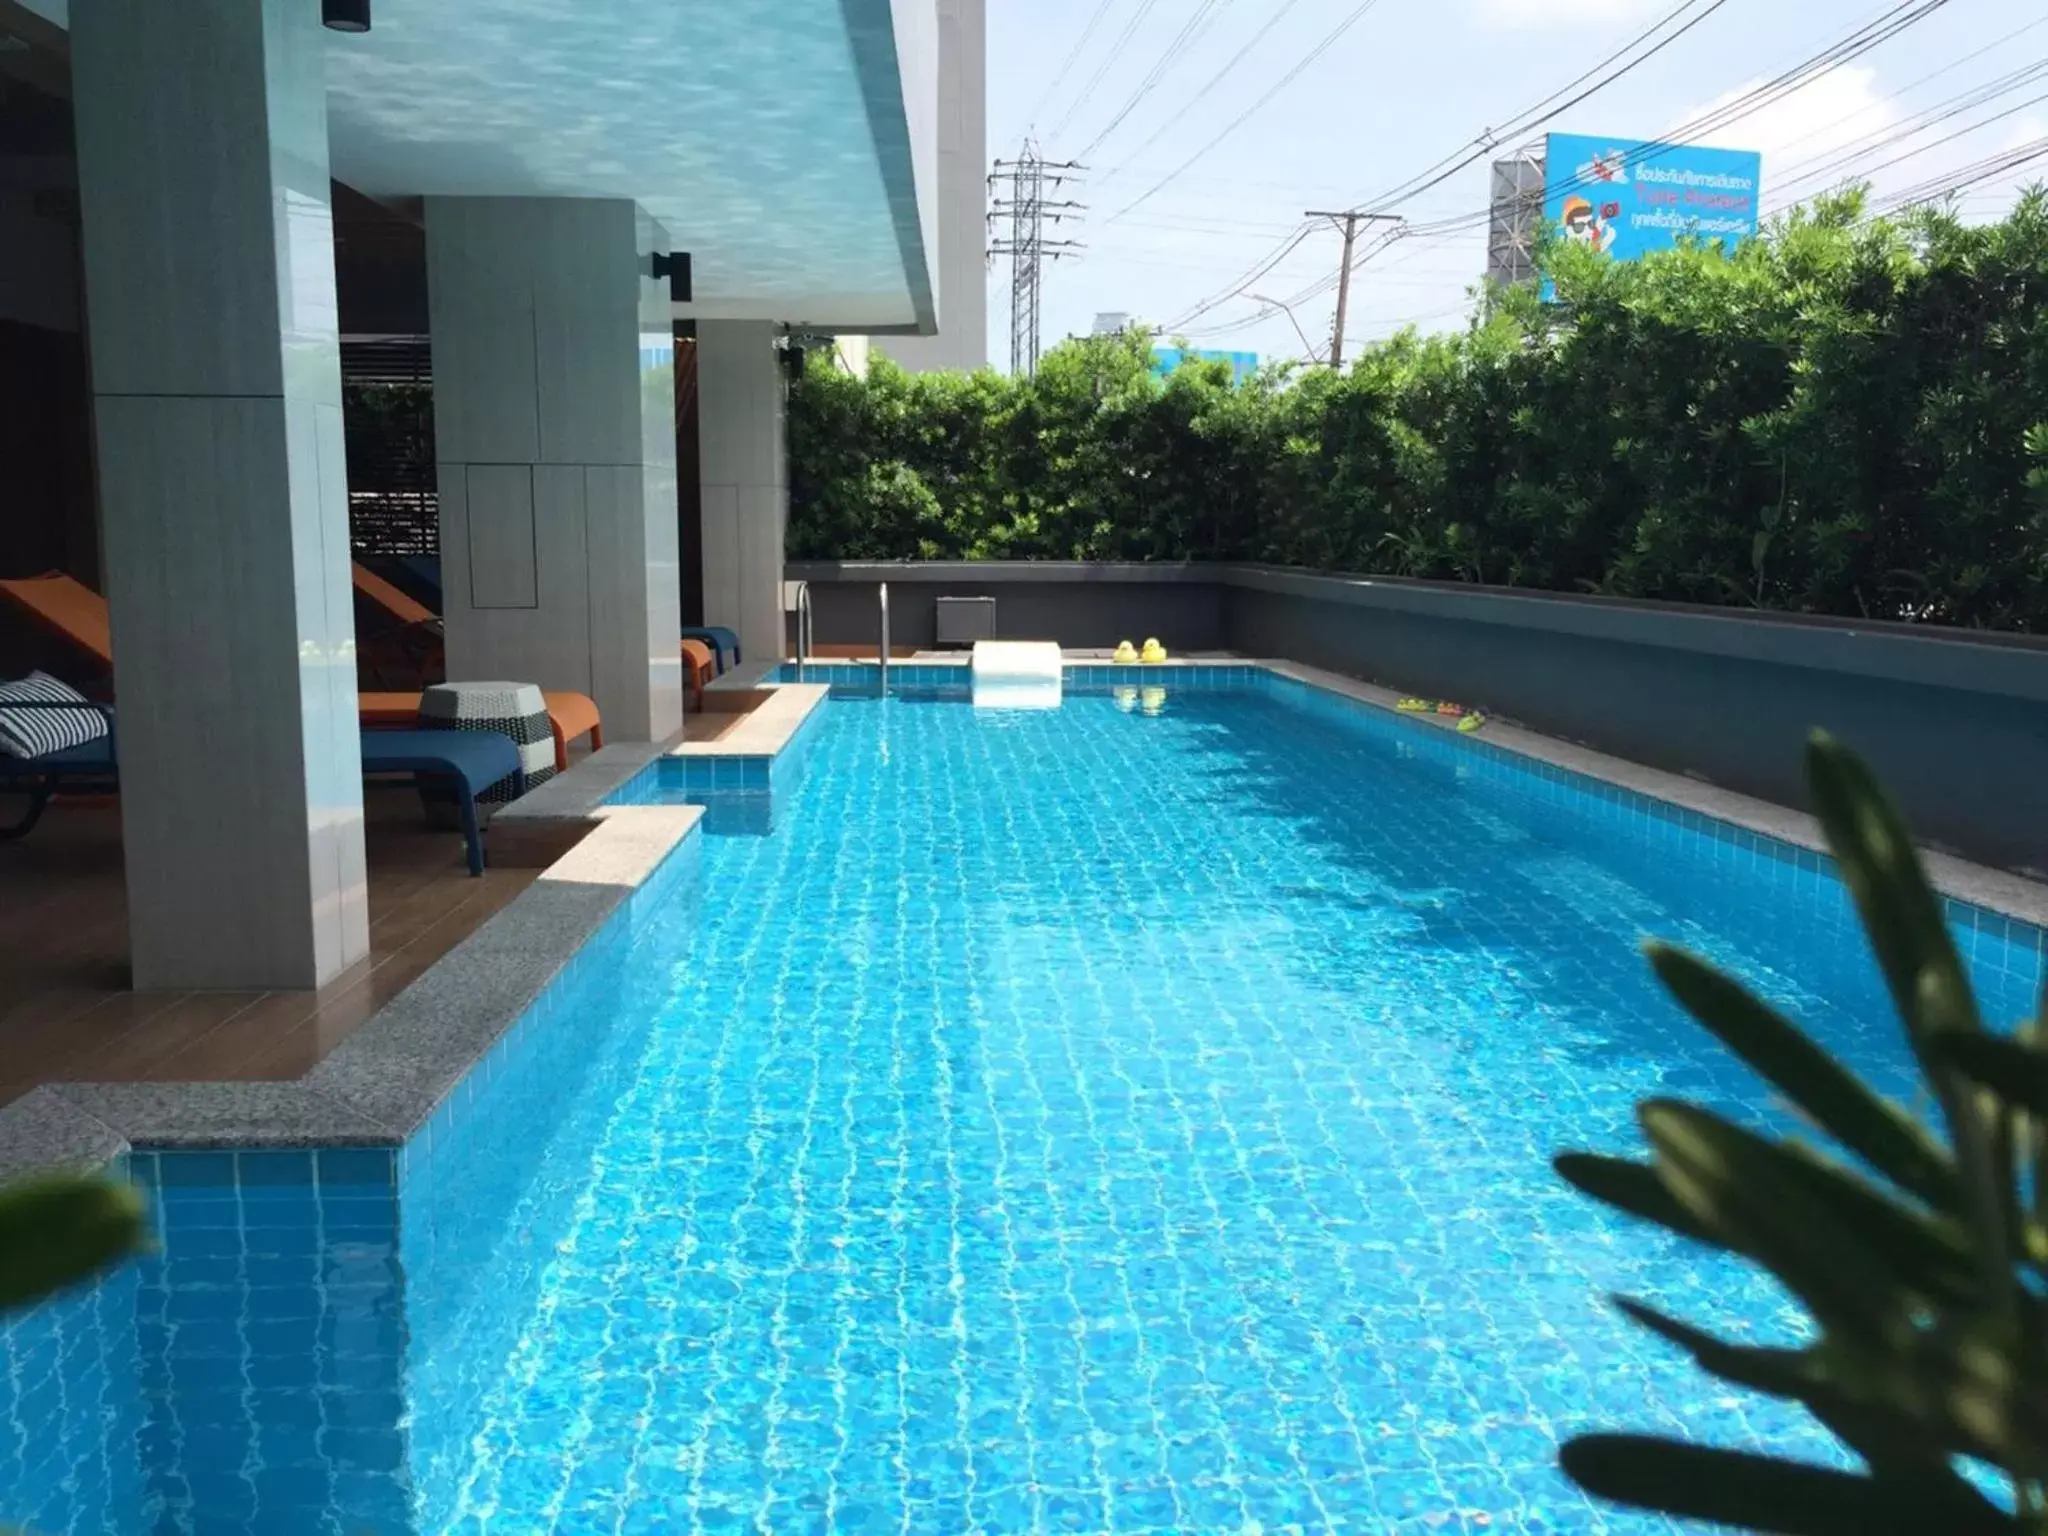 Swimming Pool in Alt Hotel Nana by UHG